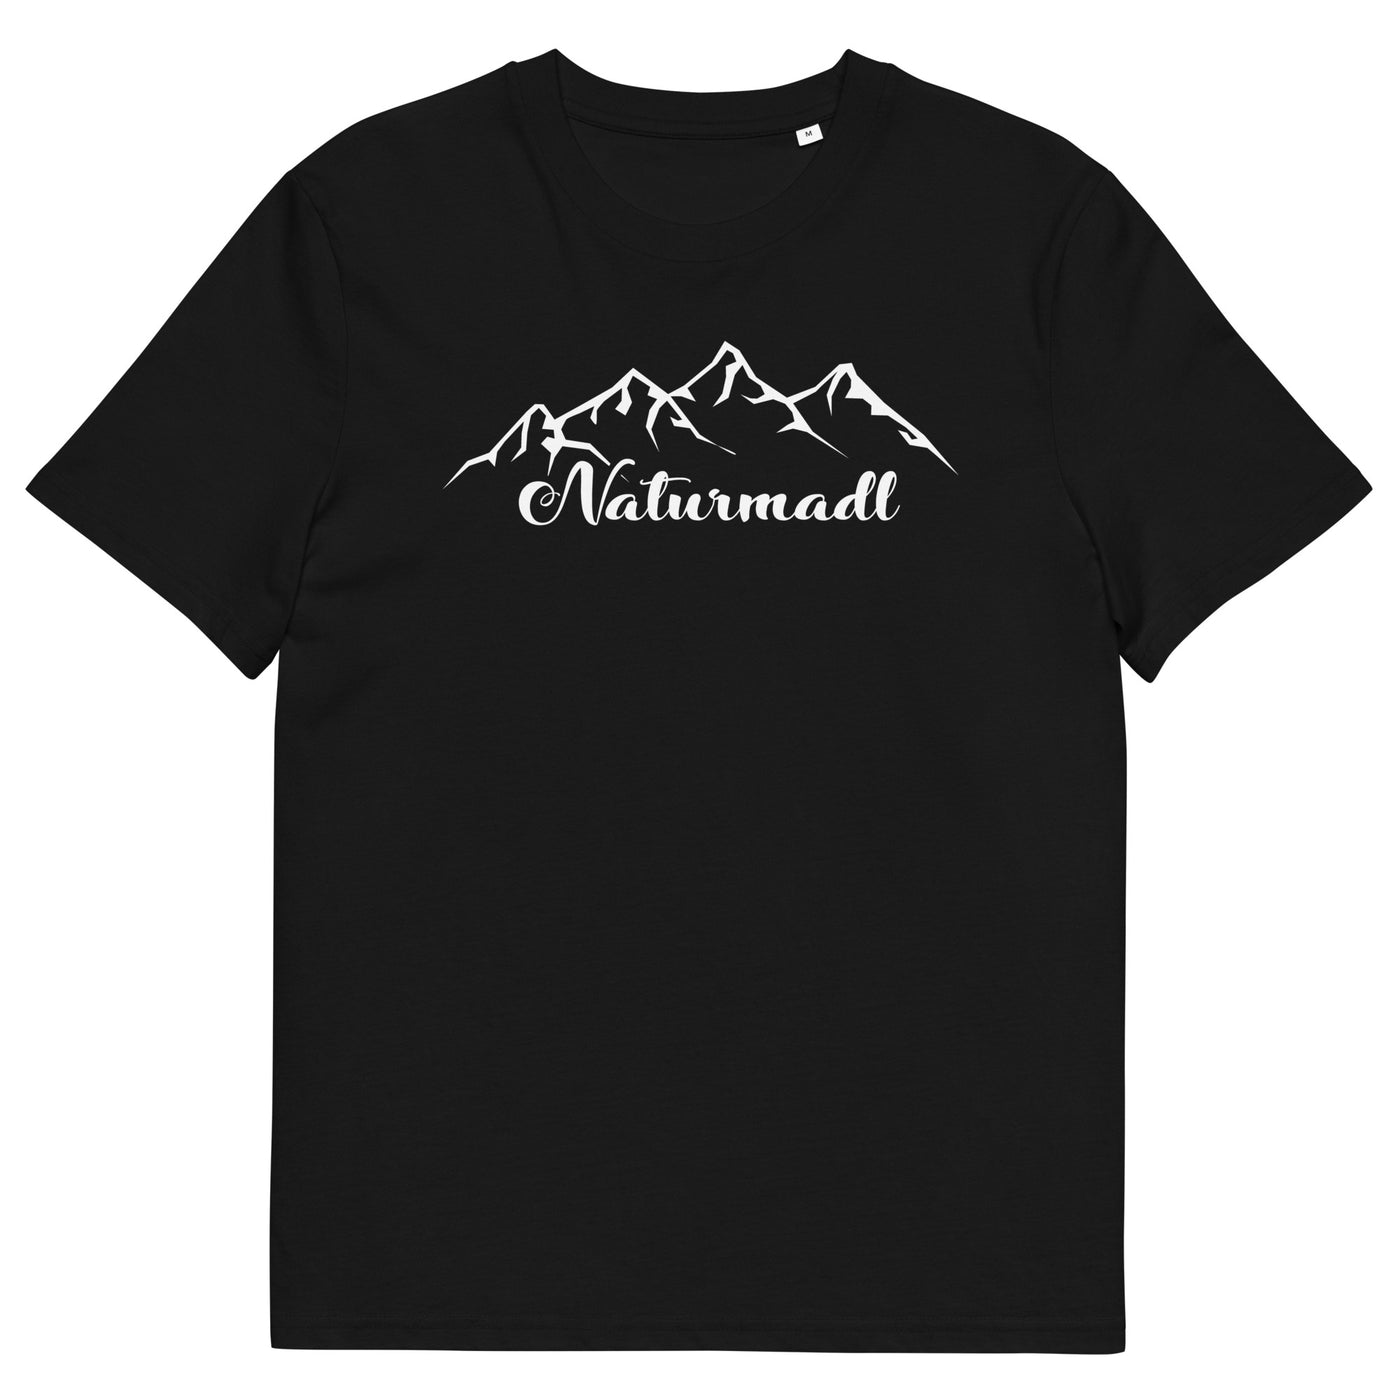 Naturmadl - Herren Premium Organic T-Shirt berge xxx yyy zzz Black